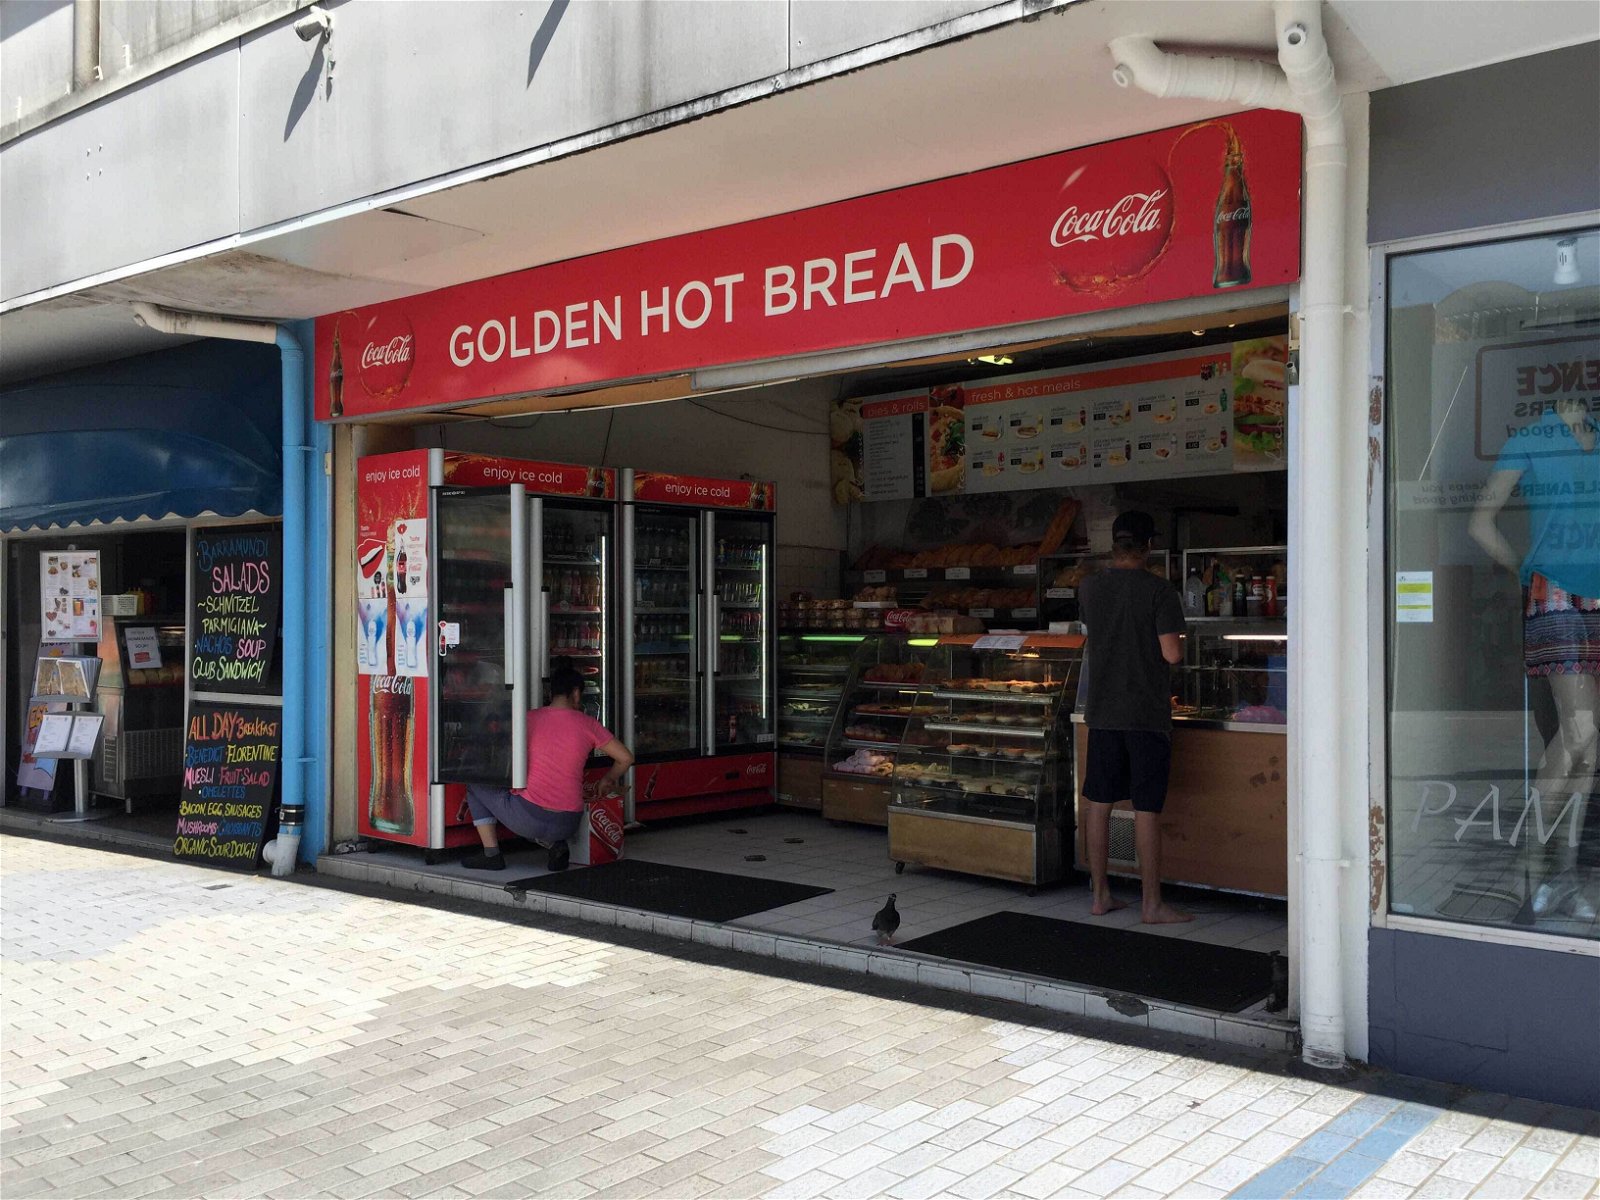 Golden Hot Bread - Cronulla - Accommodation Find 0